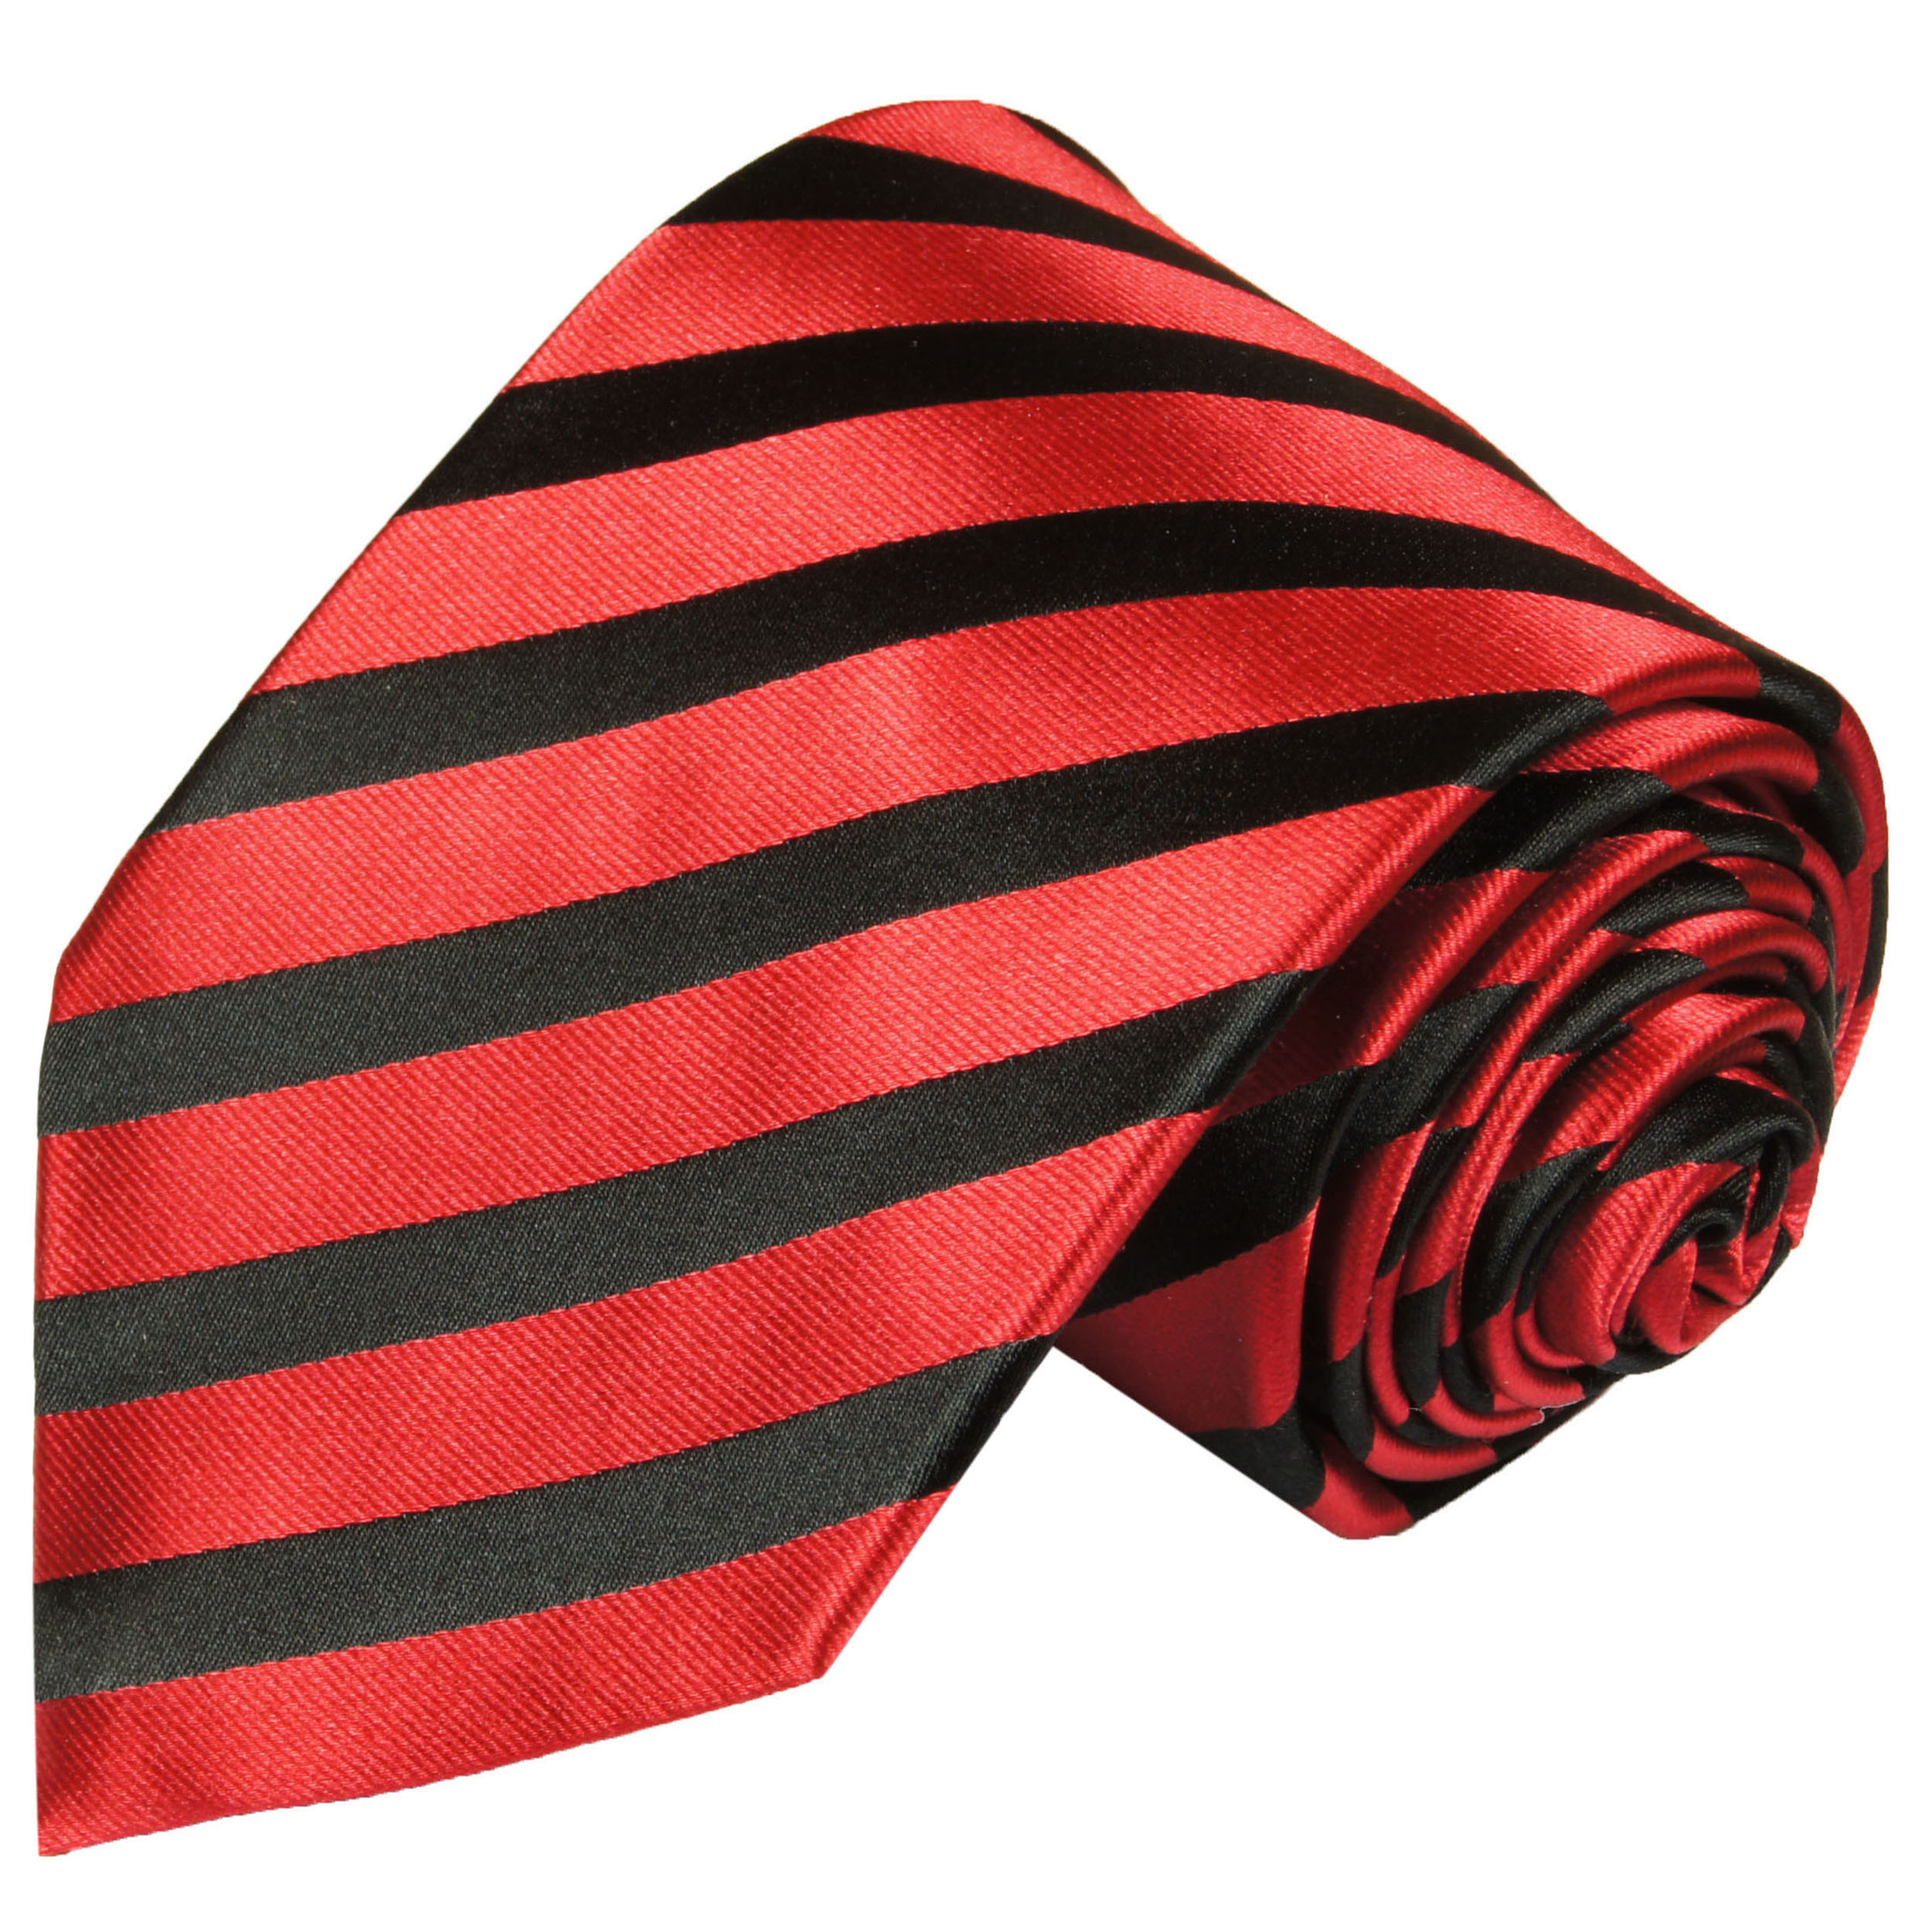 K 103.4 Model Nr Farbe Weinrot / Weuss Herren Luxus Seiden Krawatte gestreift 